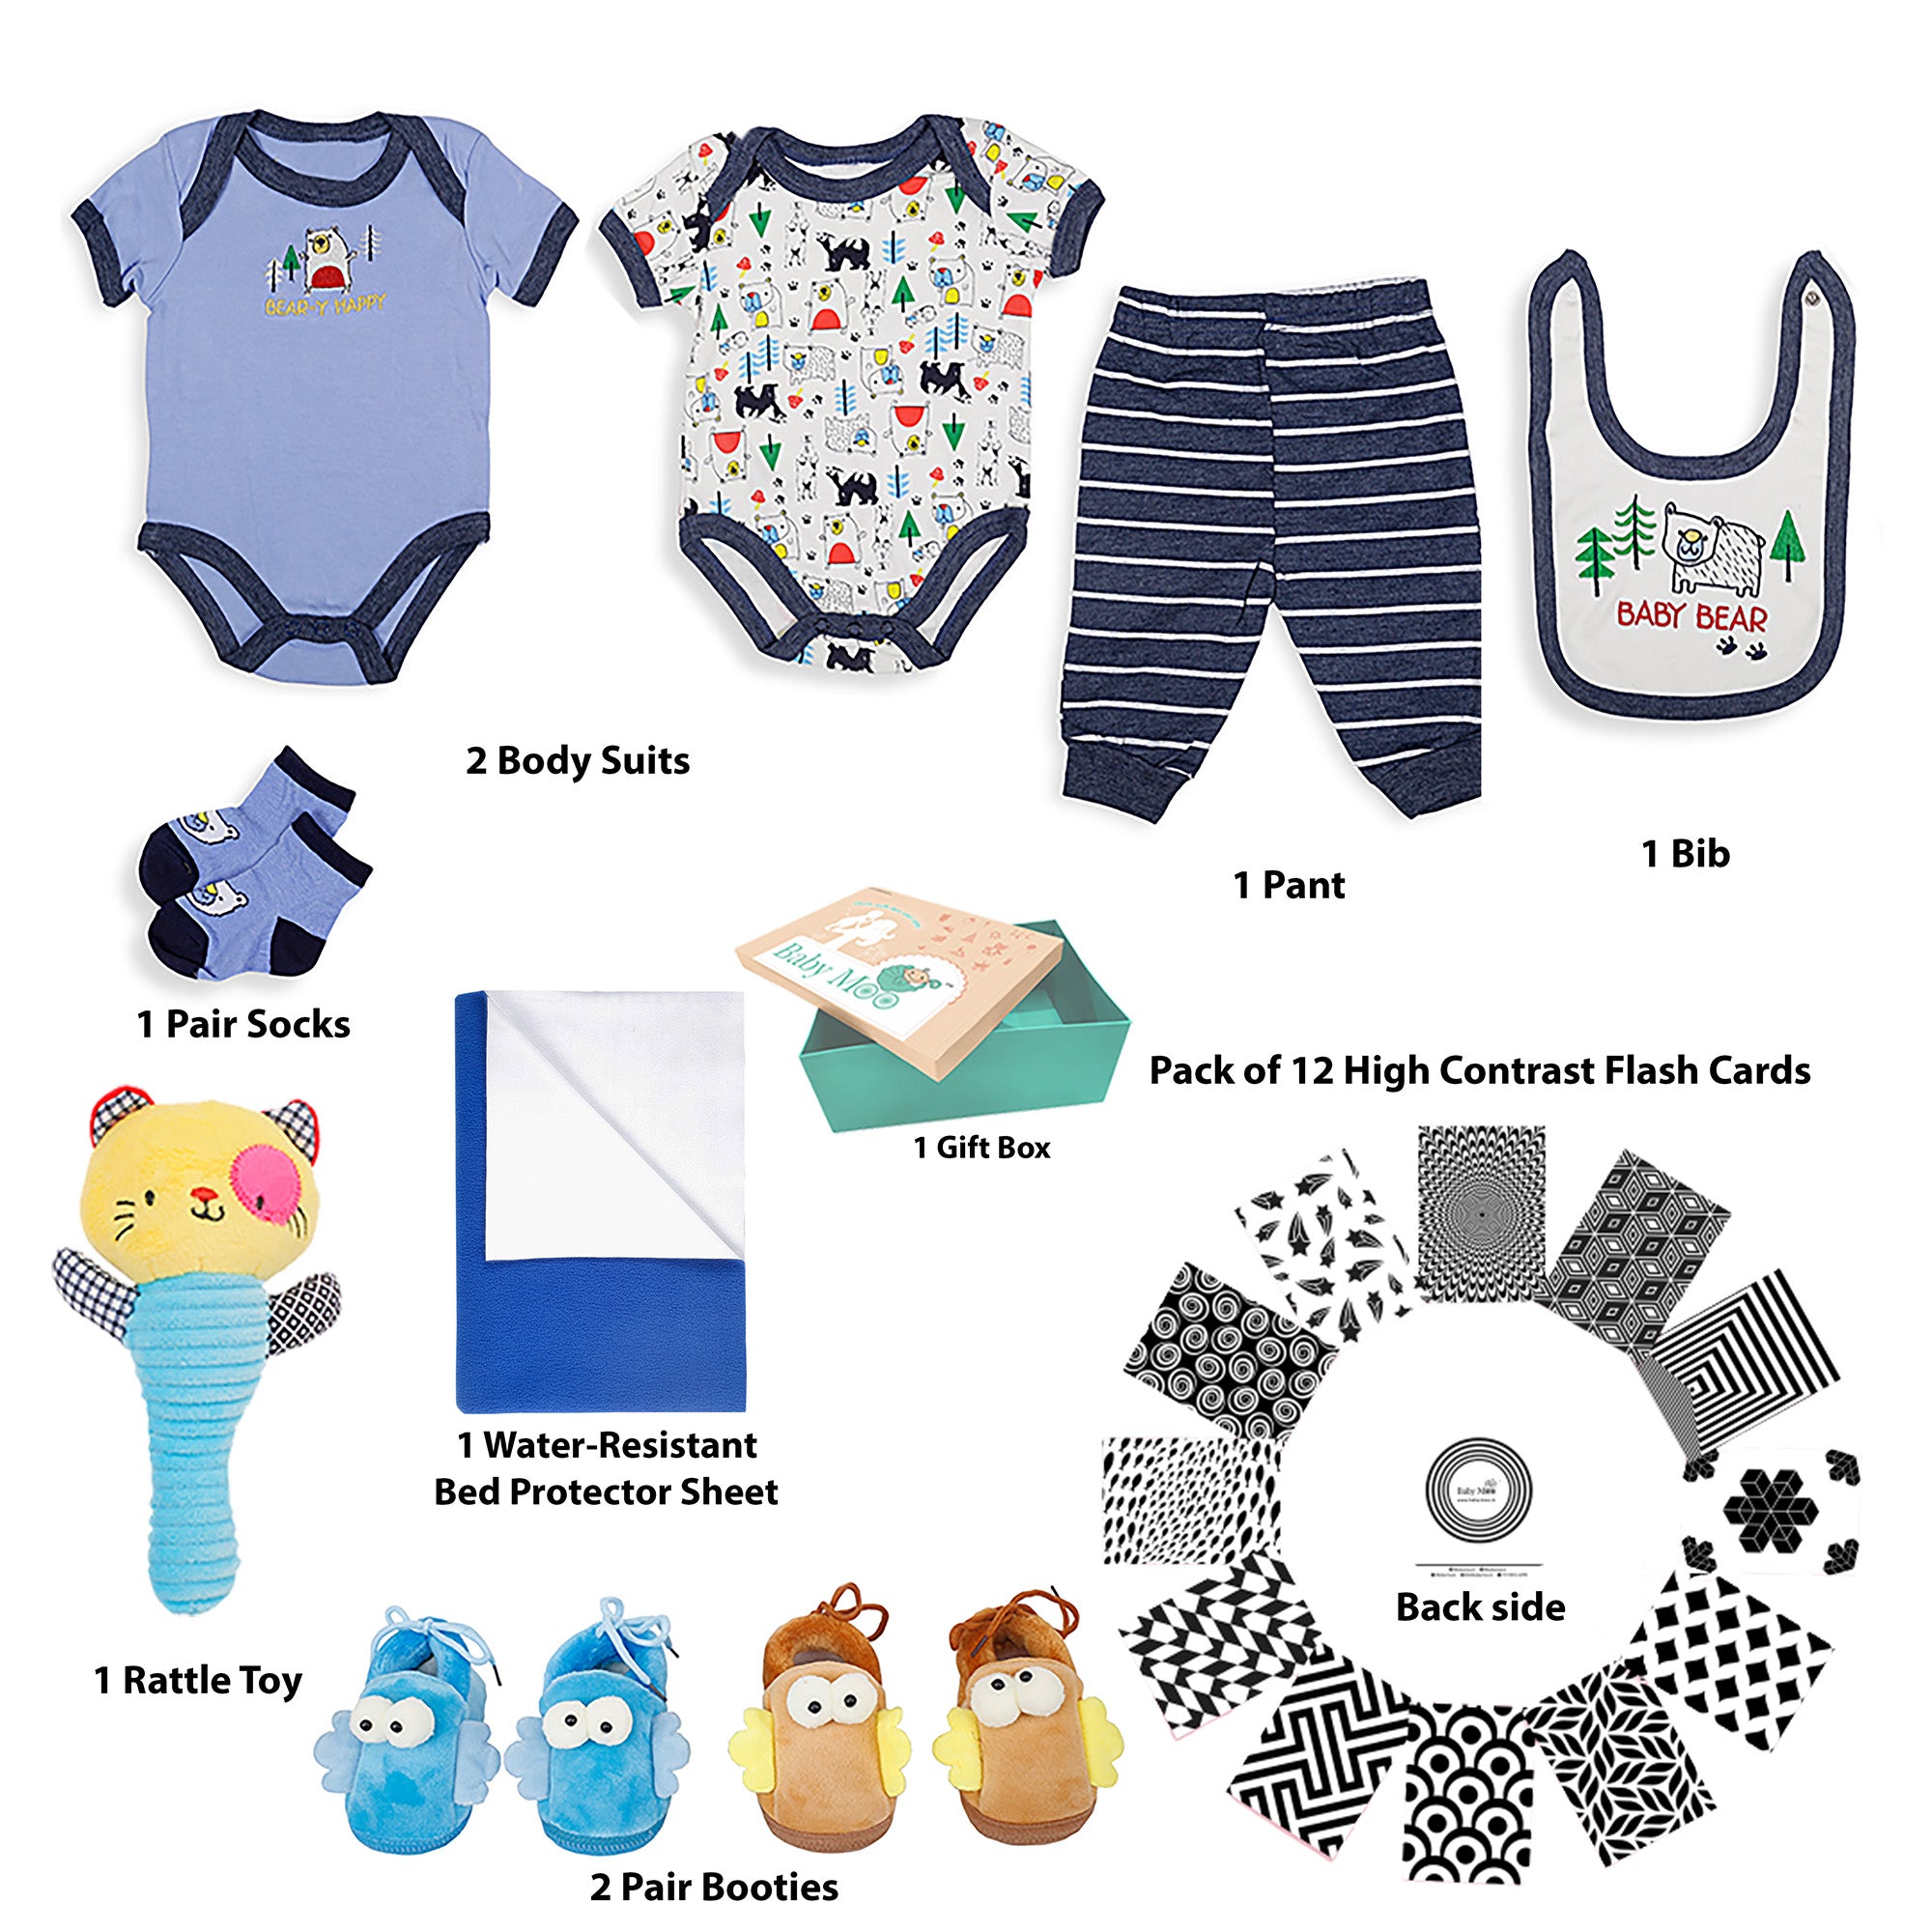 Baby Moo Adventurous Baby Boy Animal Blue 10 Pcs Gift Hamper - 0-9M Sizes Available - Baby Moo